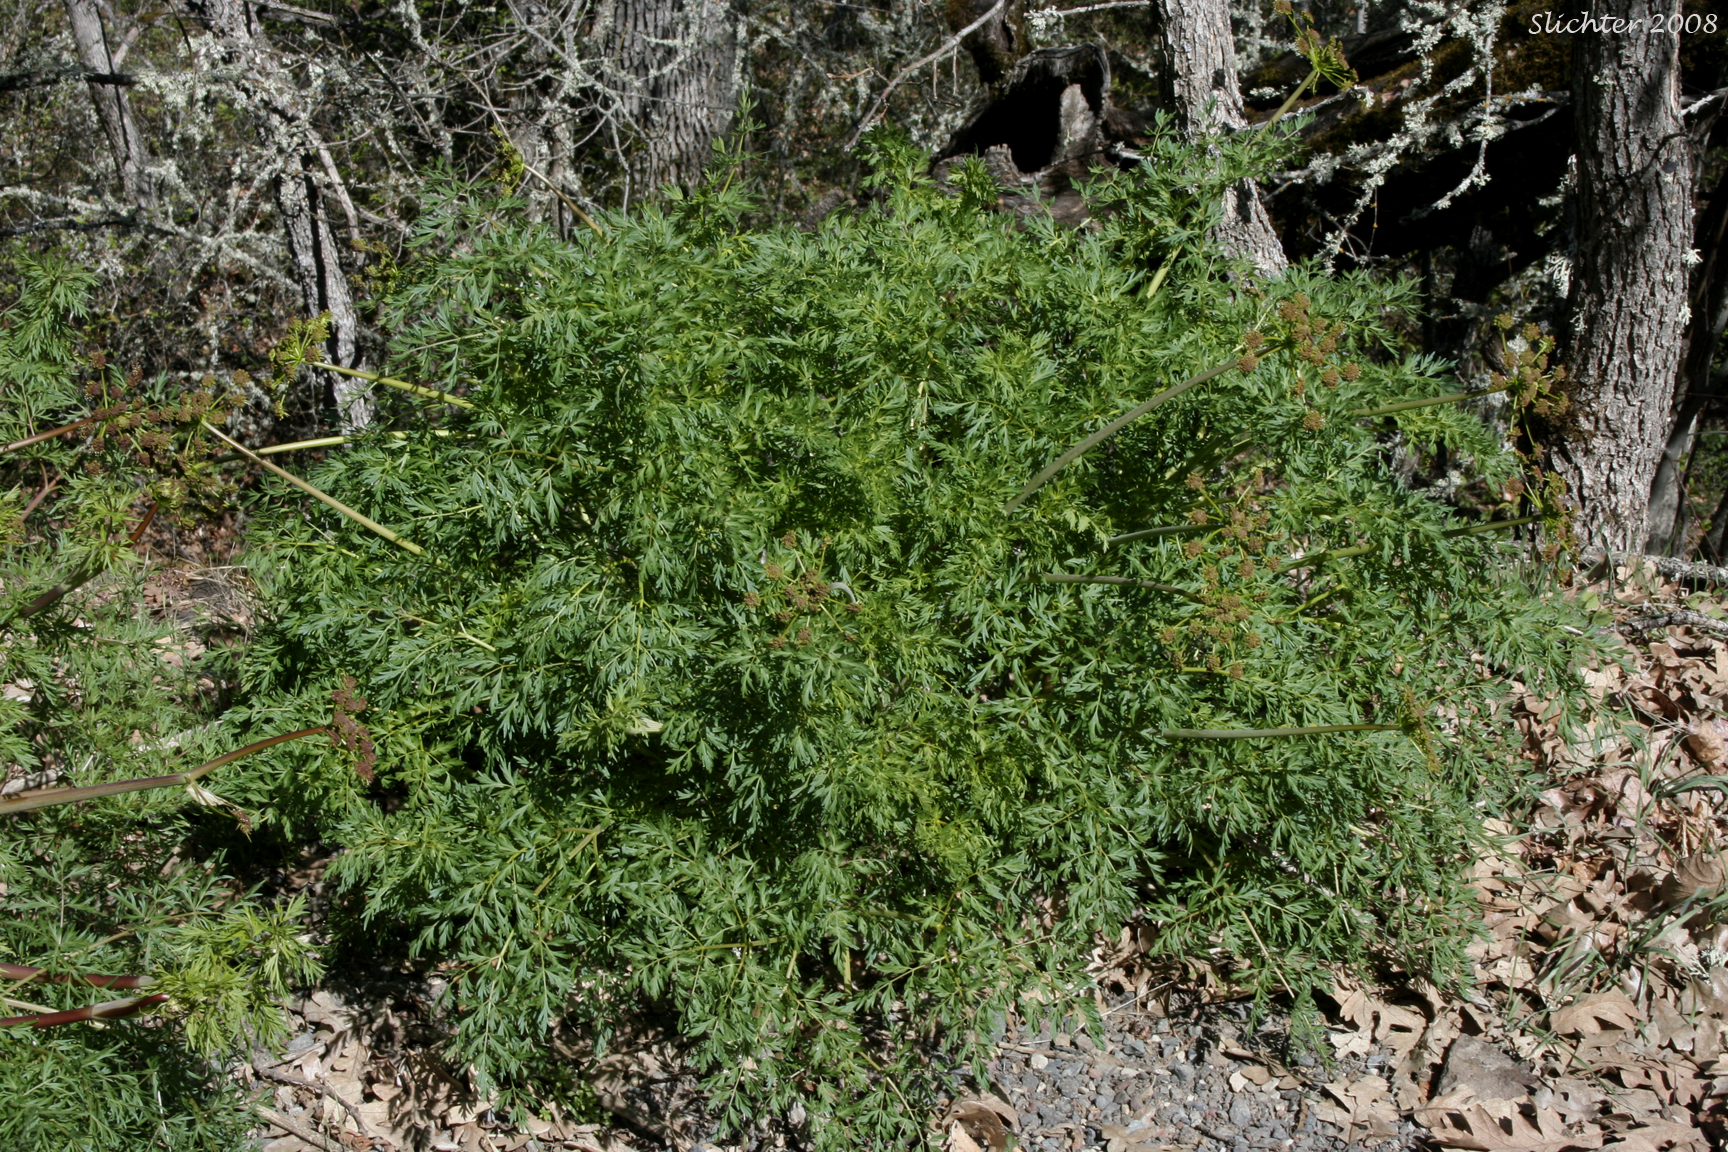 Fernleaf Biscuitroot, Fernleaf Desert Parsley, Fern-leaf Desert Parsley, Fernleaf Lomatium: Lomatium dissectum var. dissectum (Synonyms: Leptotaenia dissecta, Leptotaenia foliosa var. dissecta)